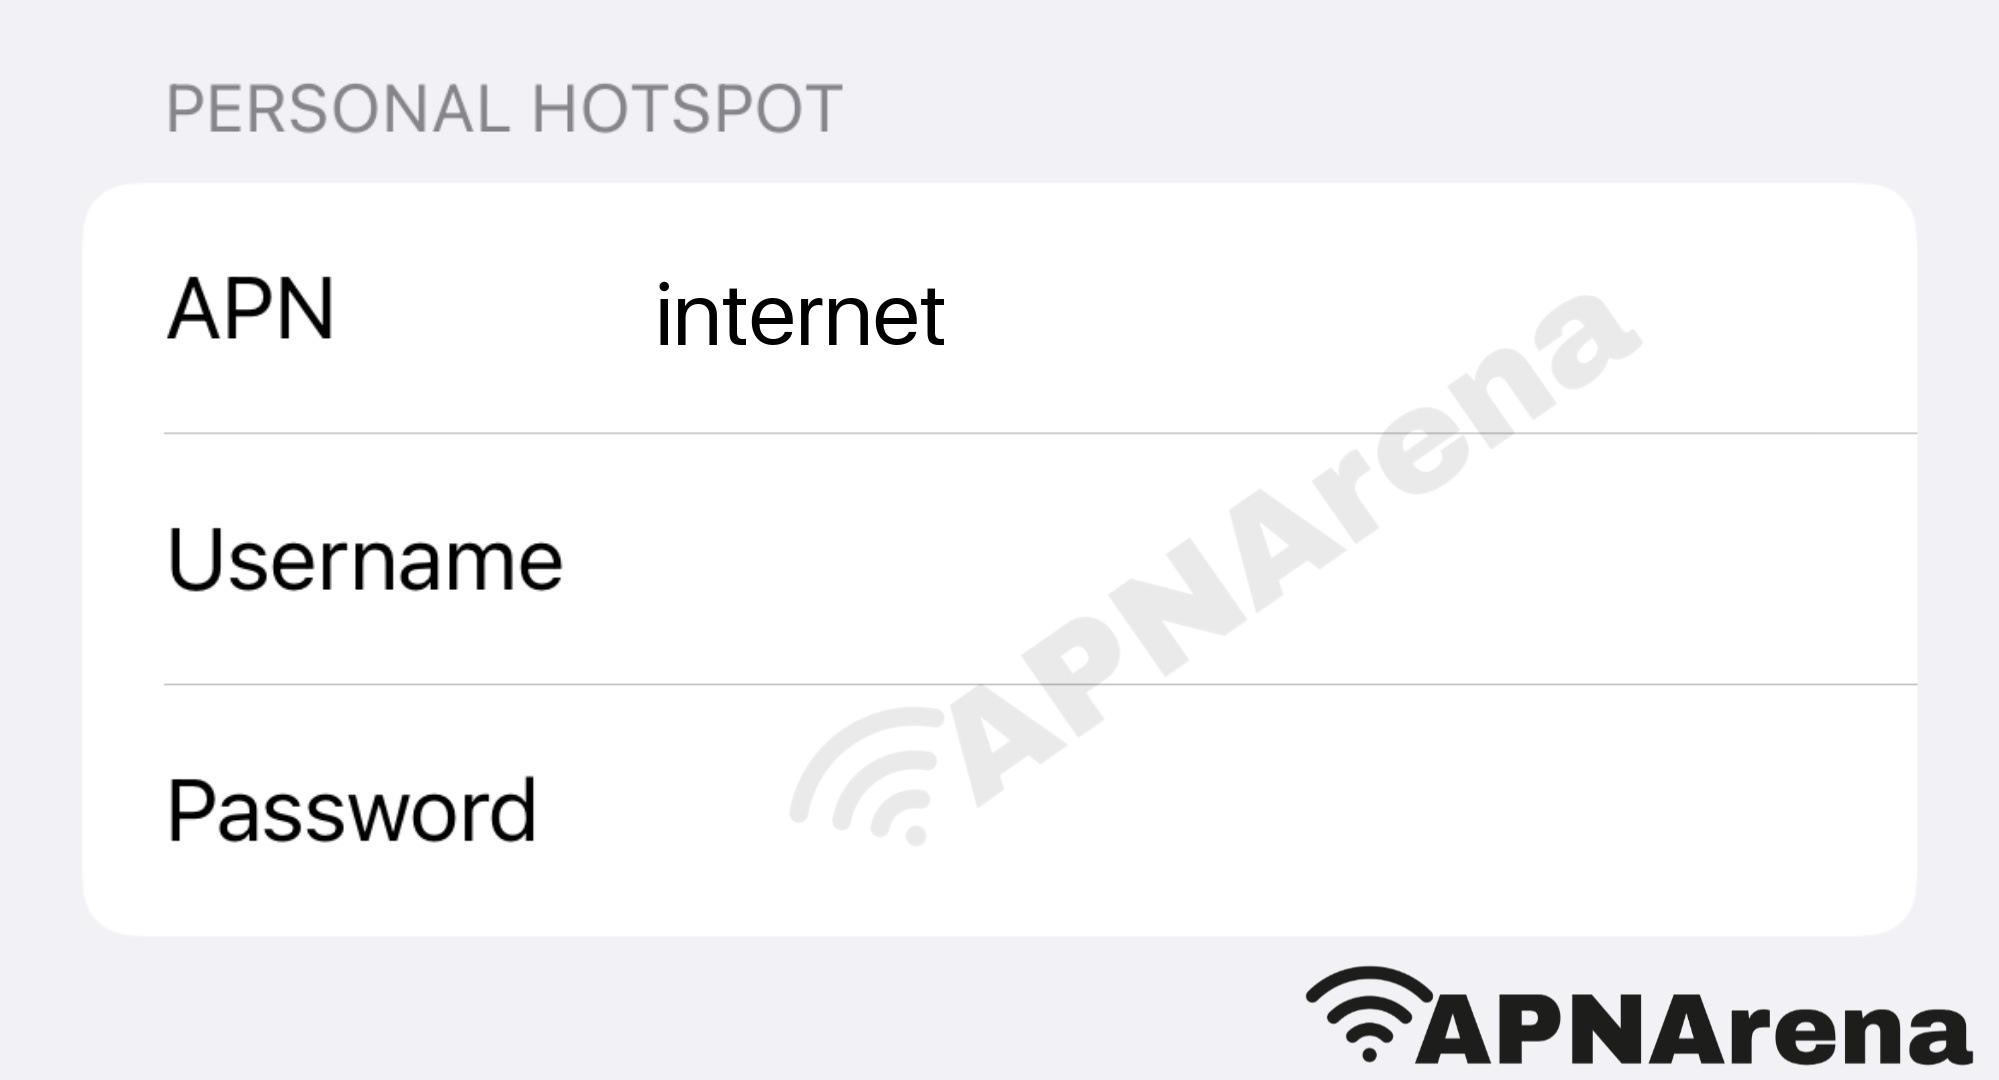 ALBtelecom Personal Hotspot Settings for iPhone